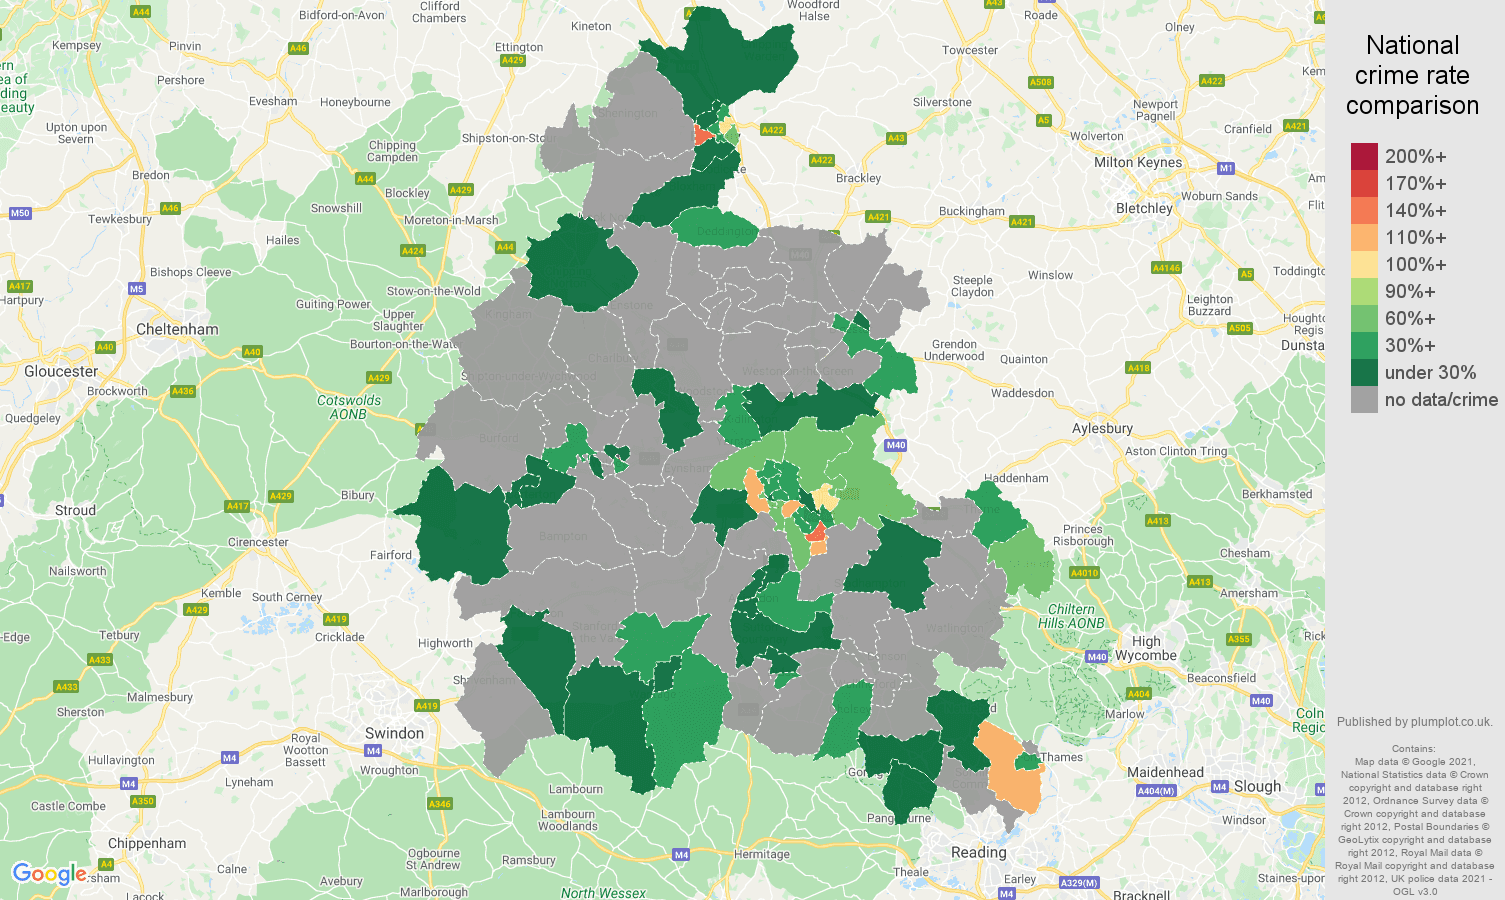 Oxfordshire robbery crime rate comparison map